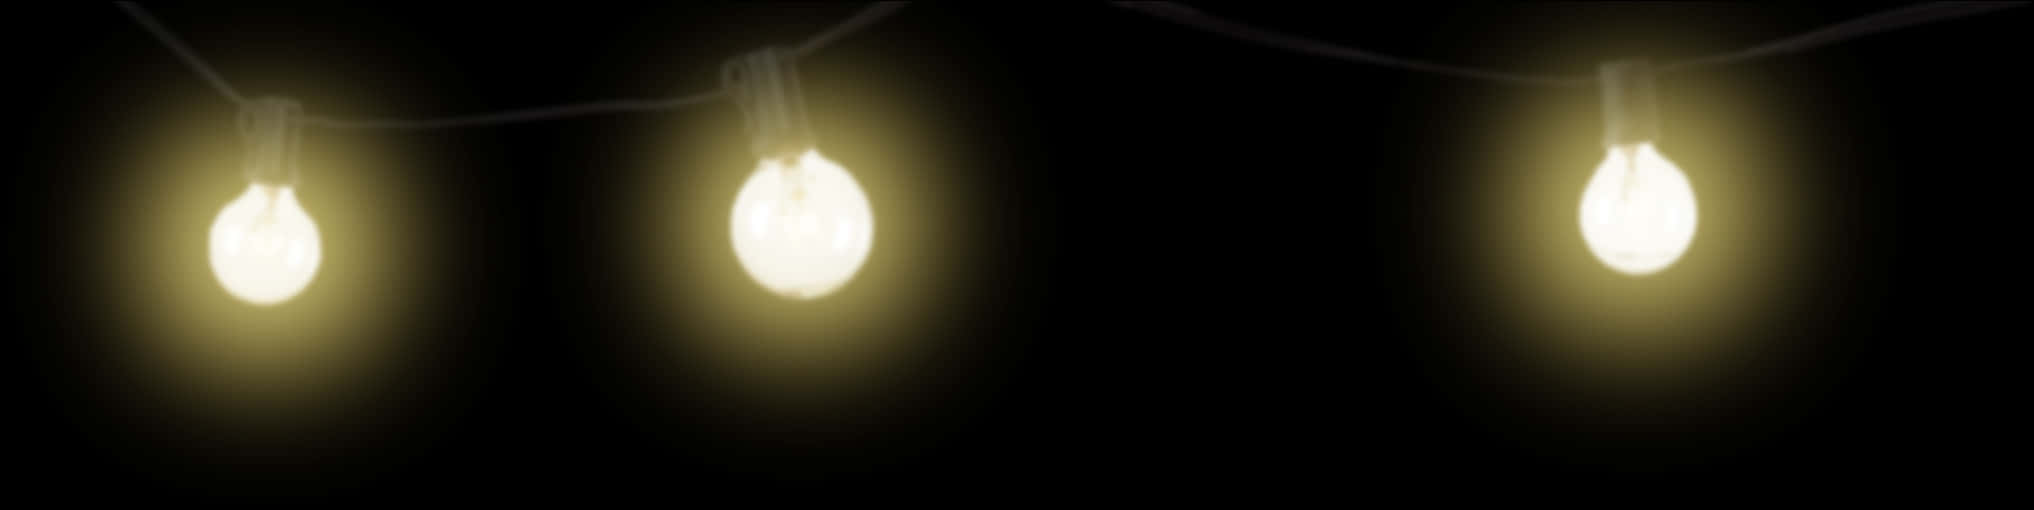 Glowing Bulbsin Darkness PNG image